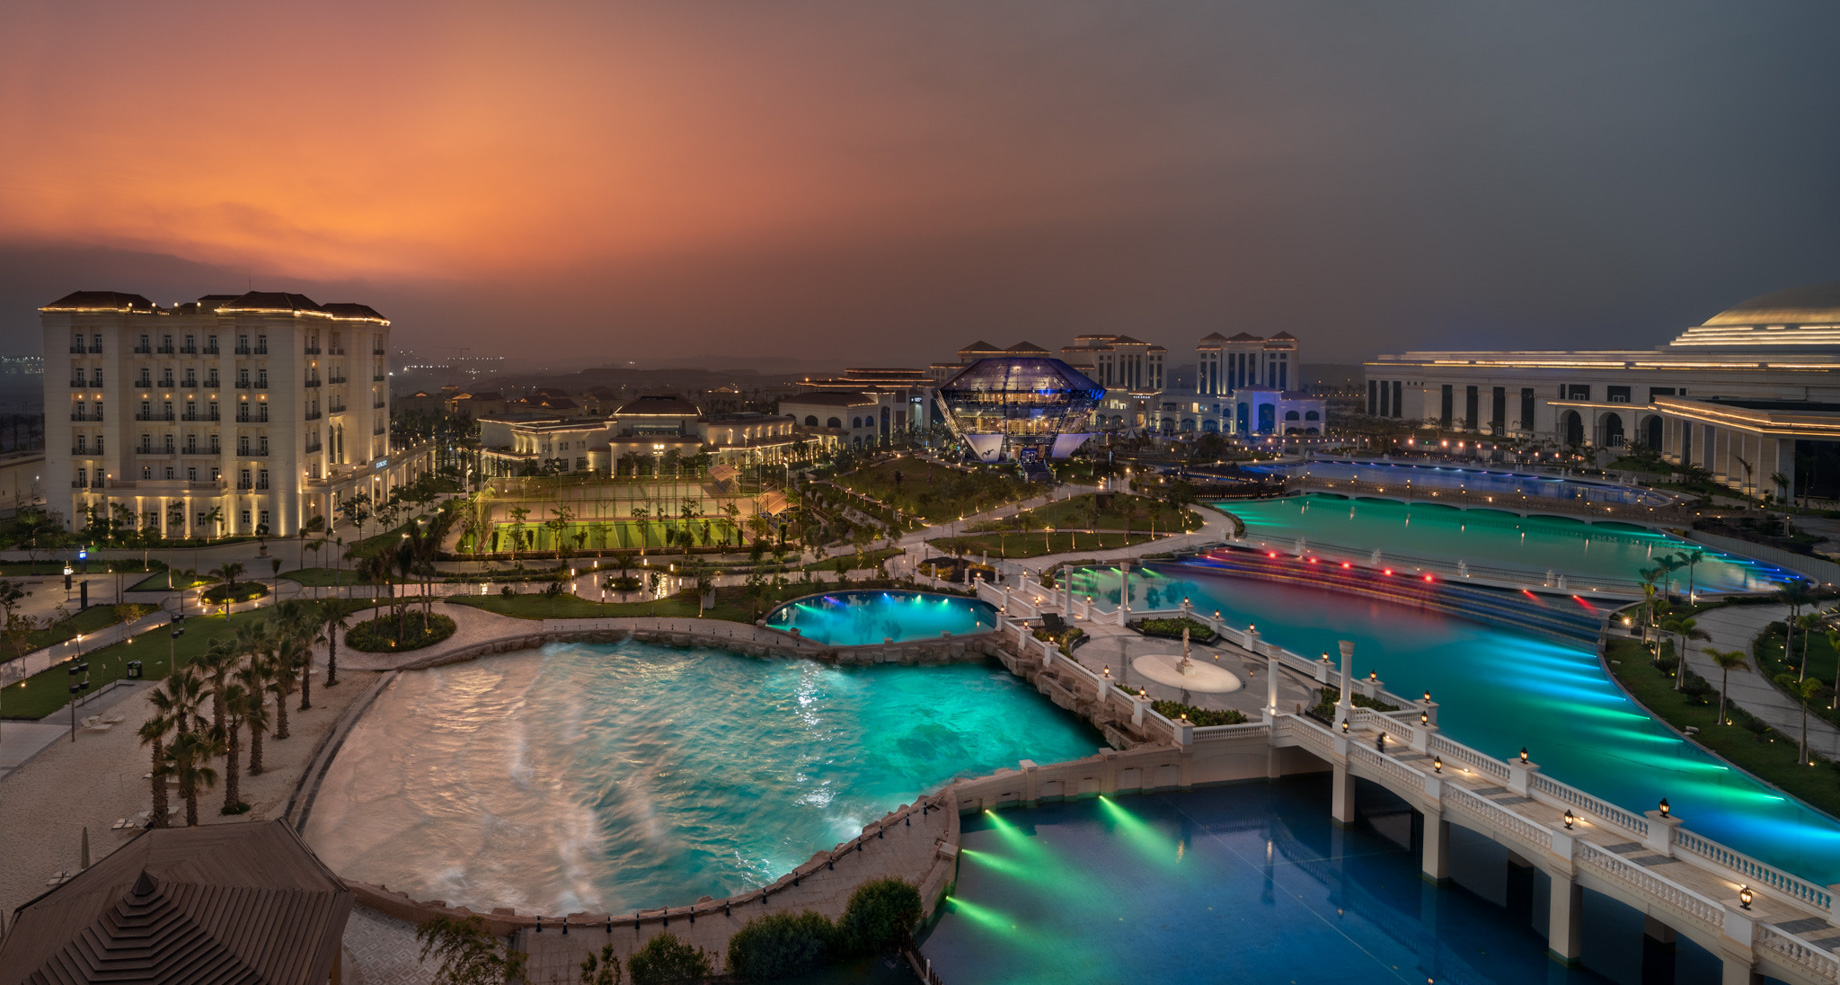 The St. Regis Almasa Hotel – Cairo, Egypt – Twilight Aerial Pool View